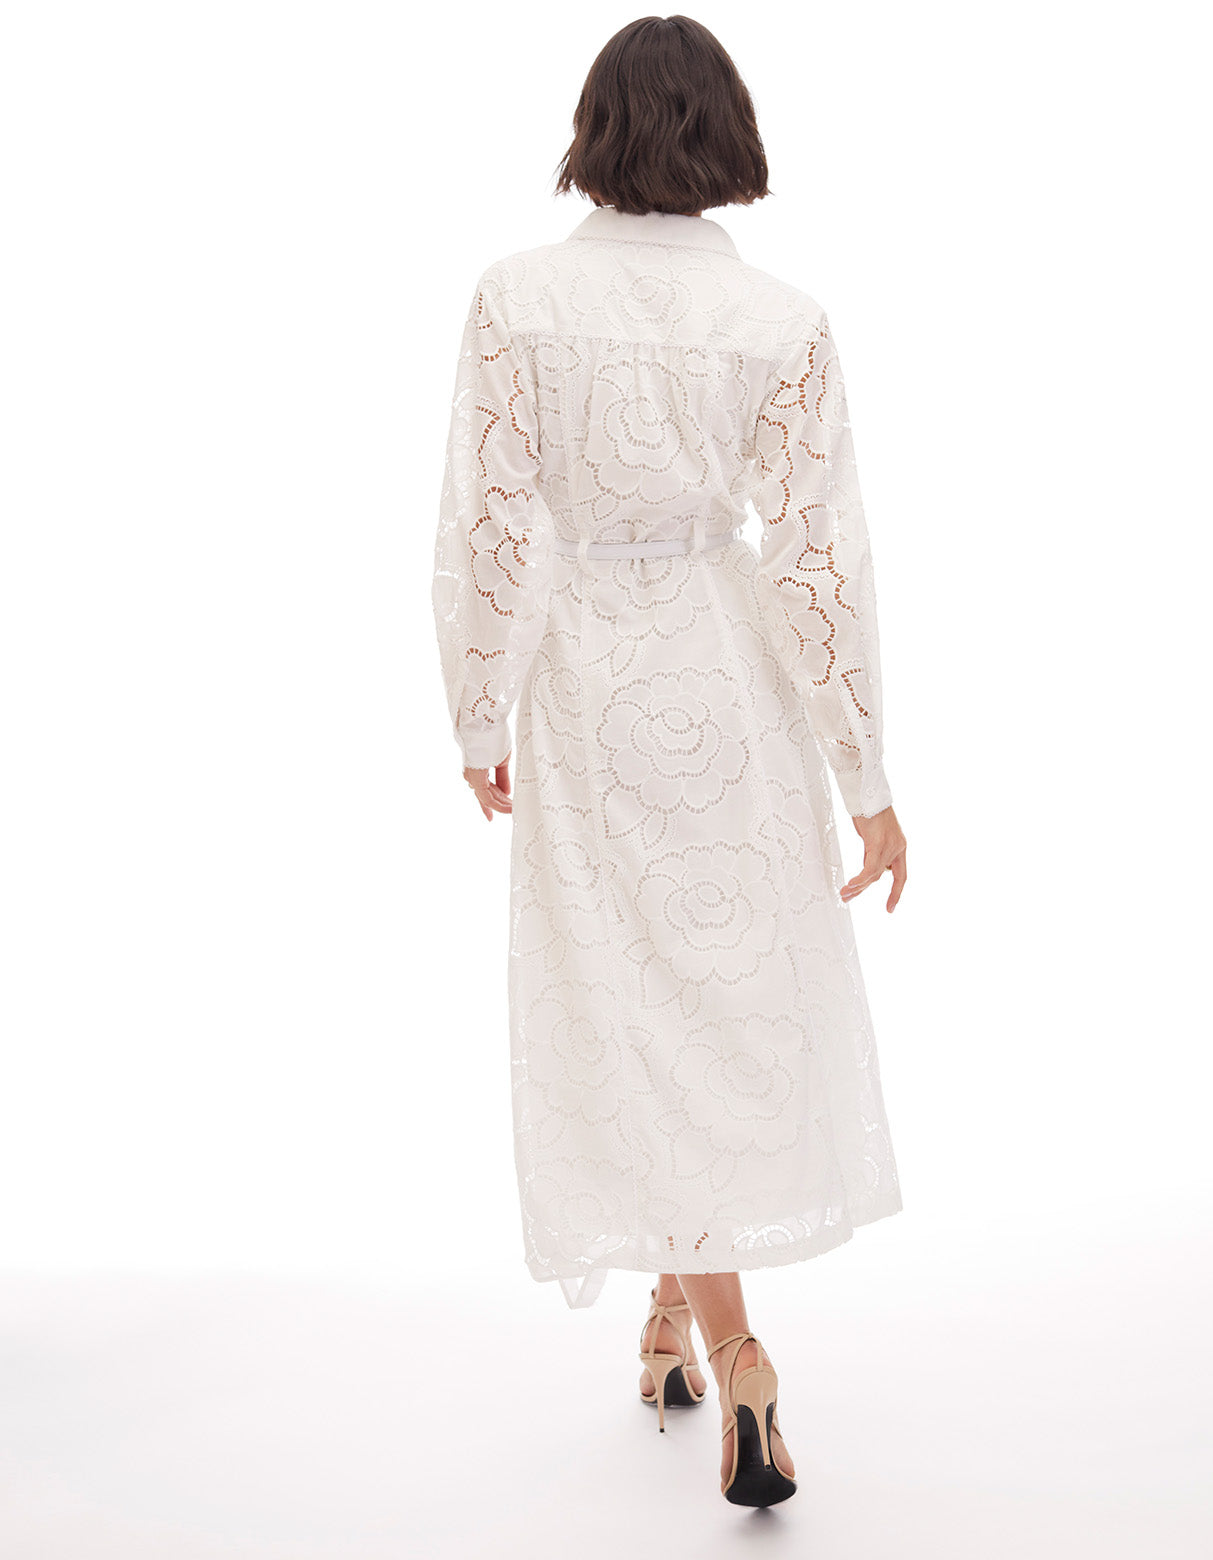 ivy optic white long sleeve eyelet lined shirt midi dress - flattering work appropriate dresses for women